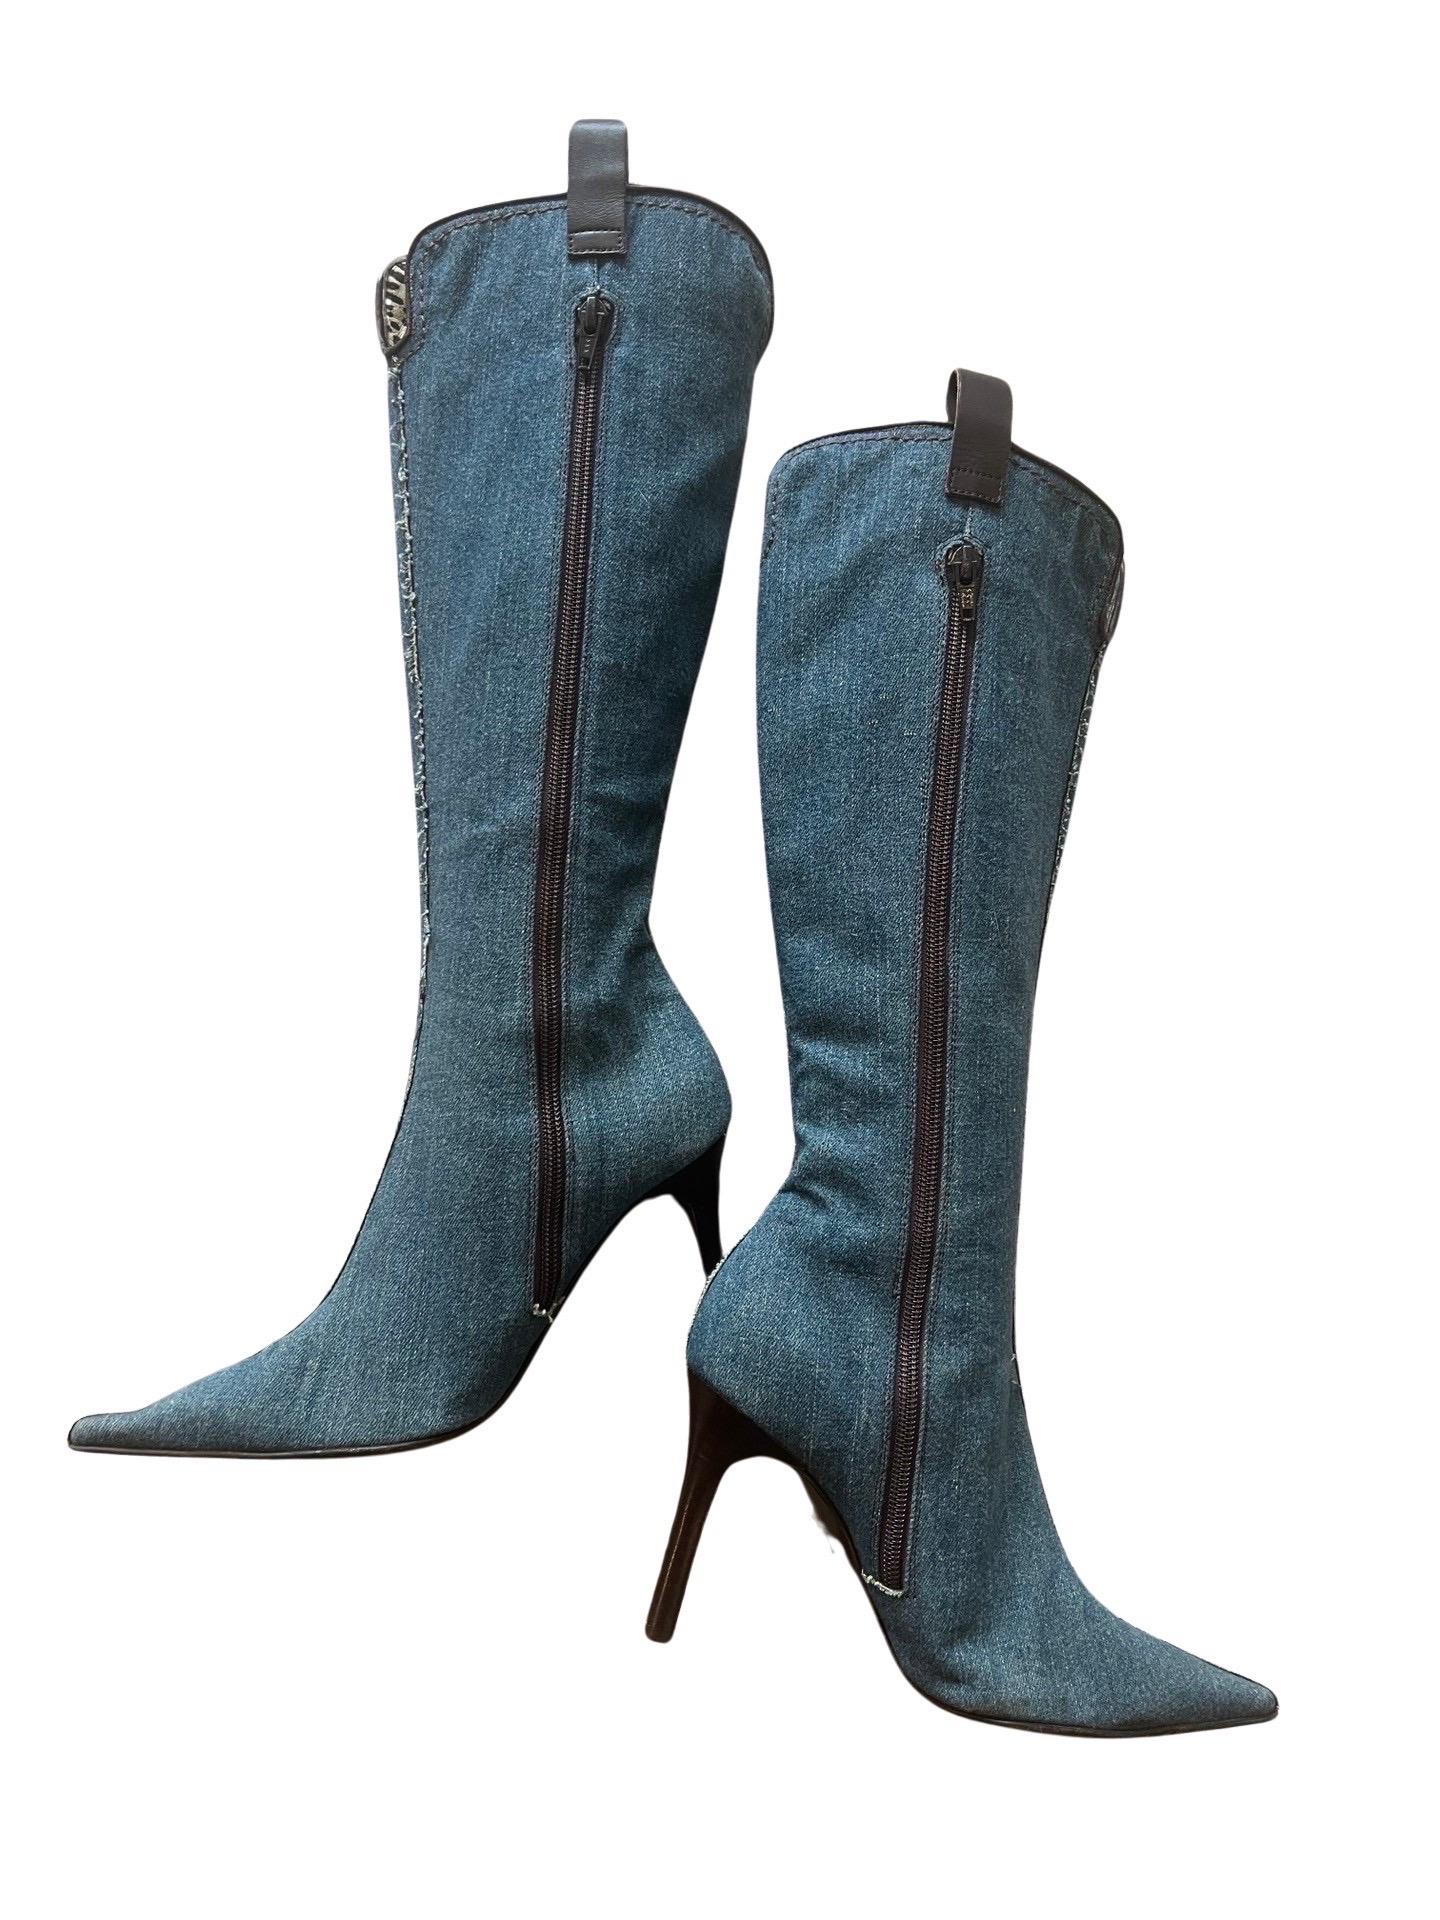 Y2K Roberto Cavalli Jean Applique Boots In Good Condition For Sale In Miami, FL